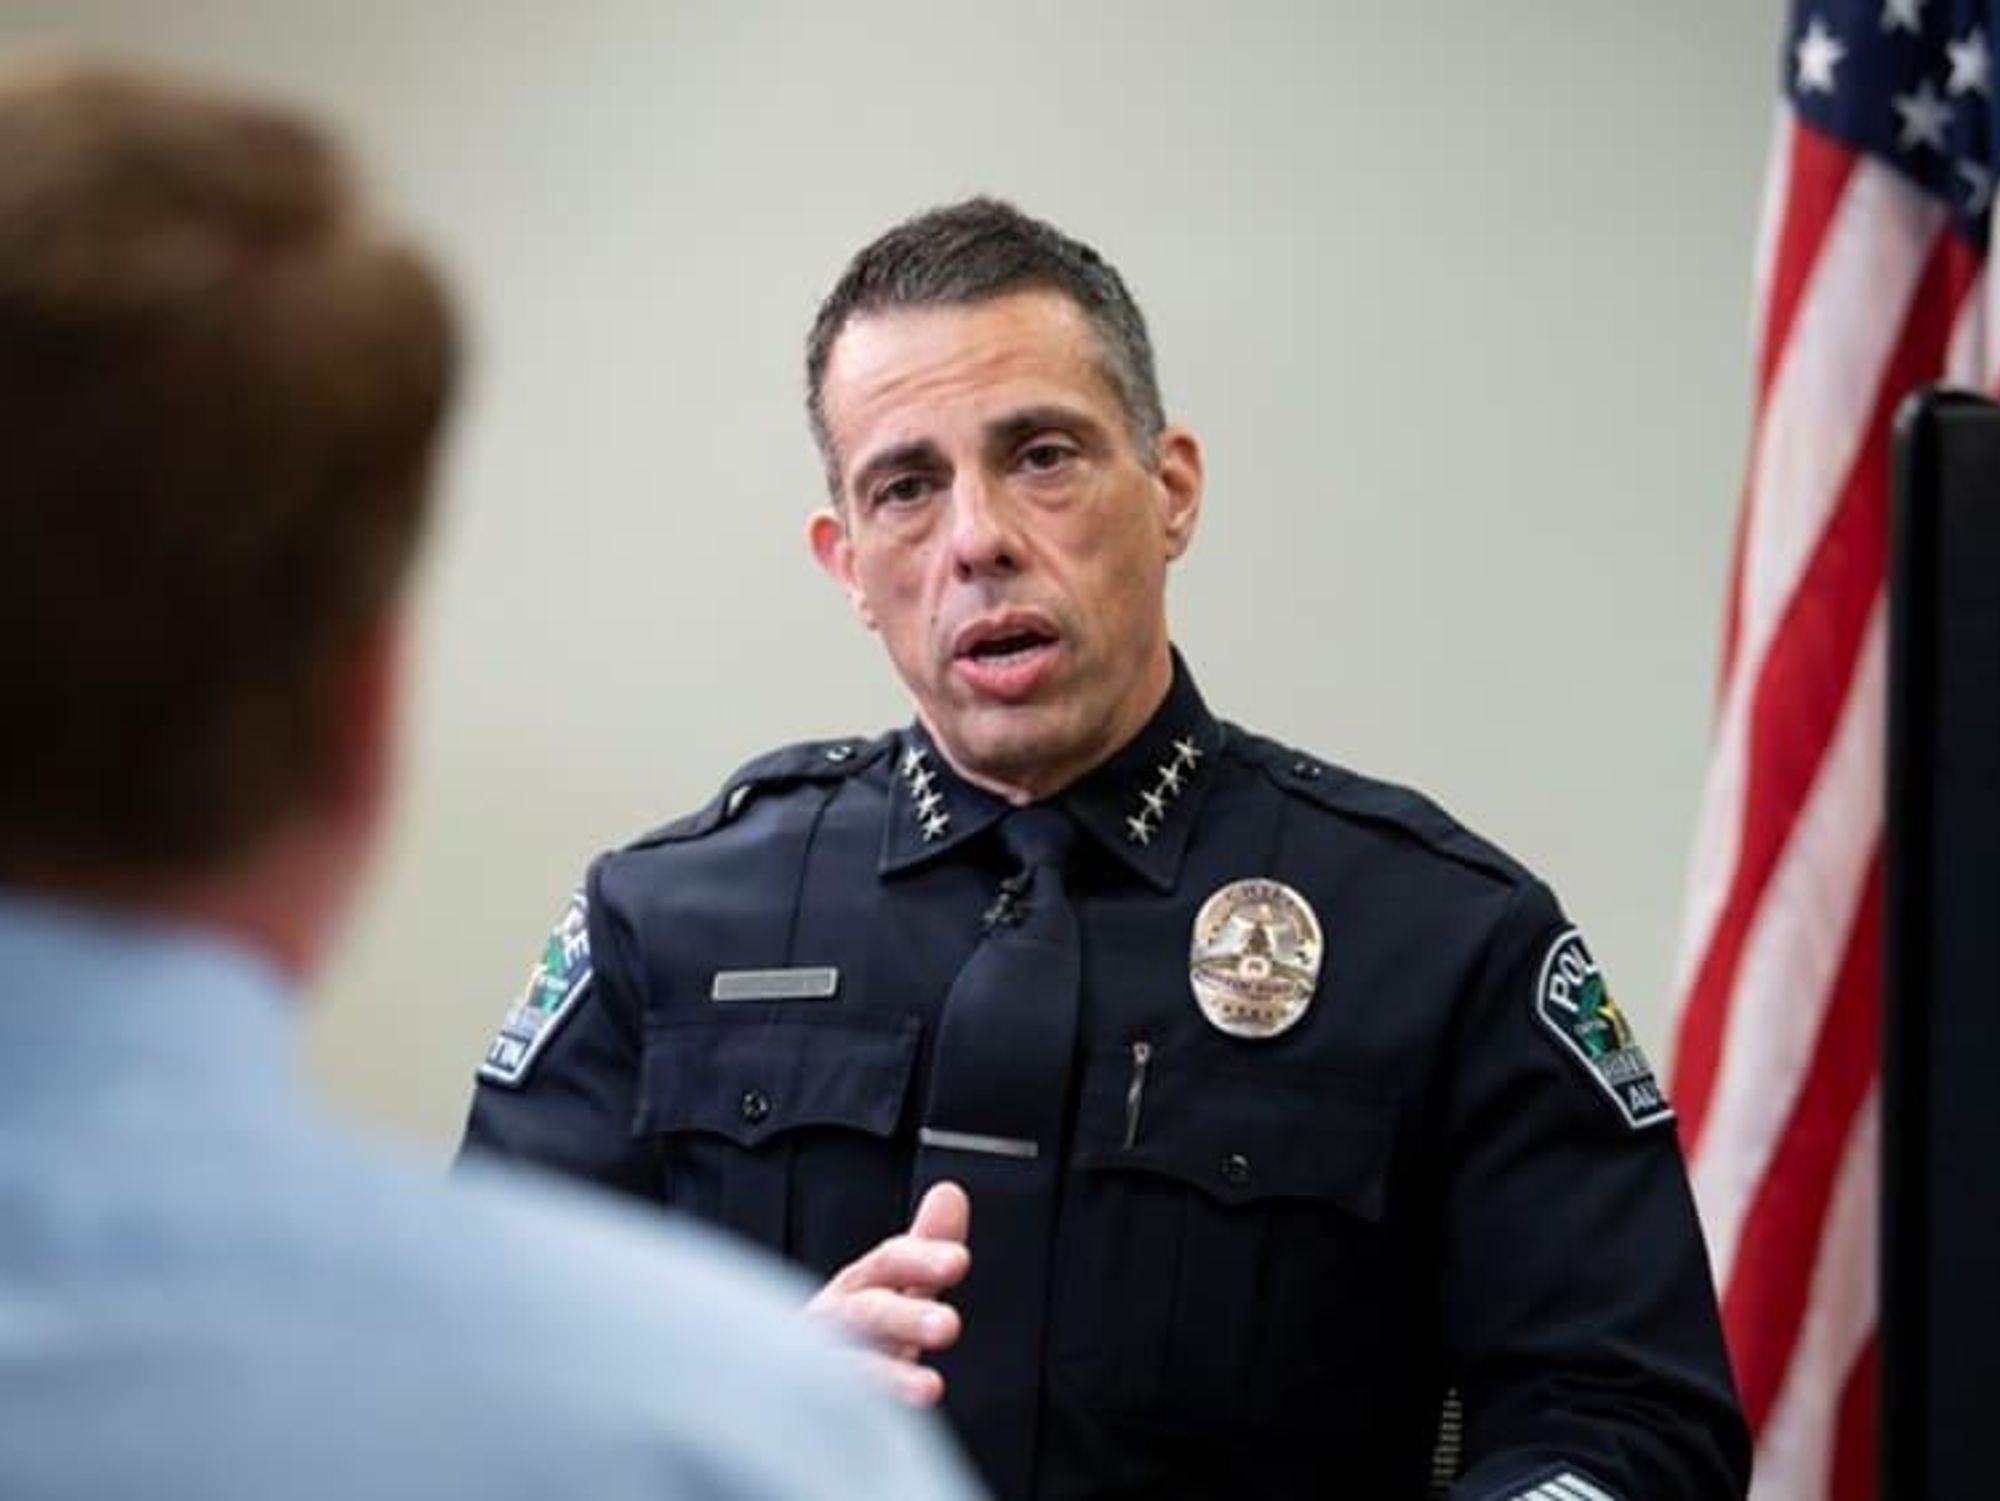 Austin Police Chief Joseph Chacon